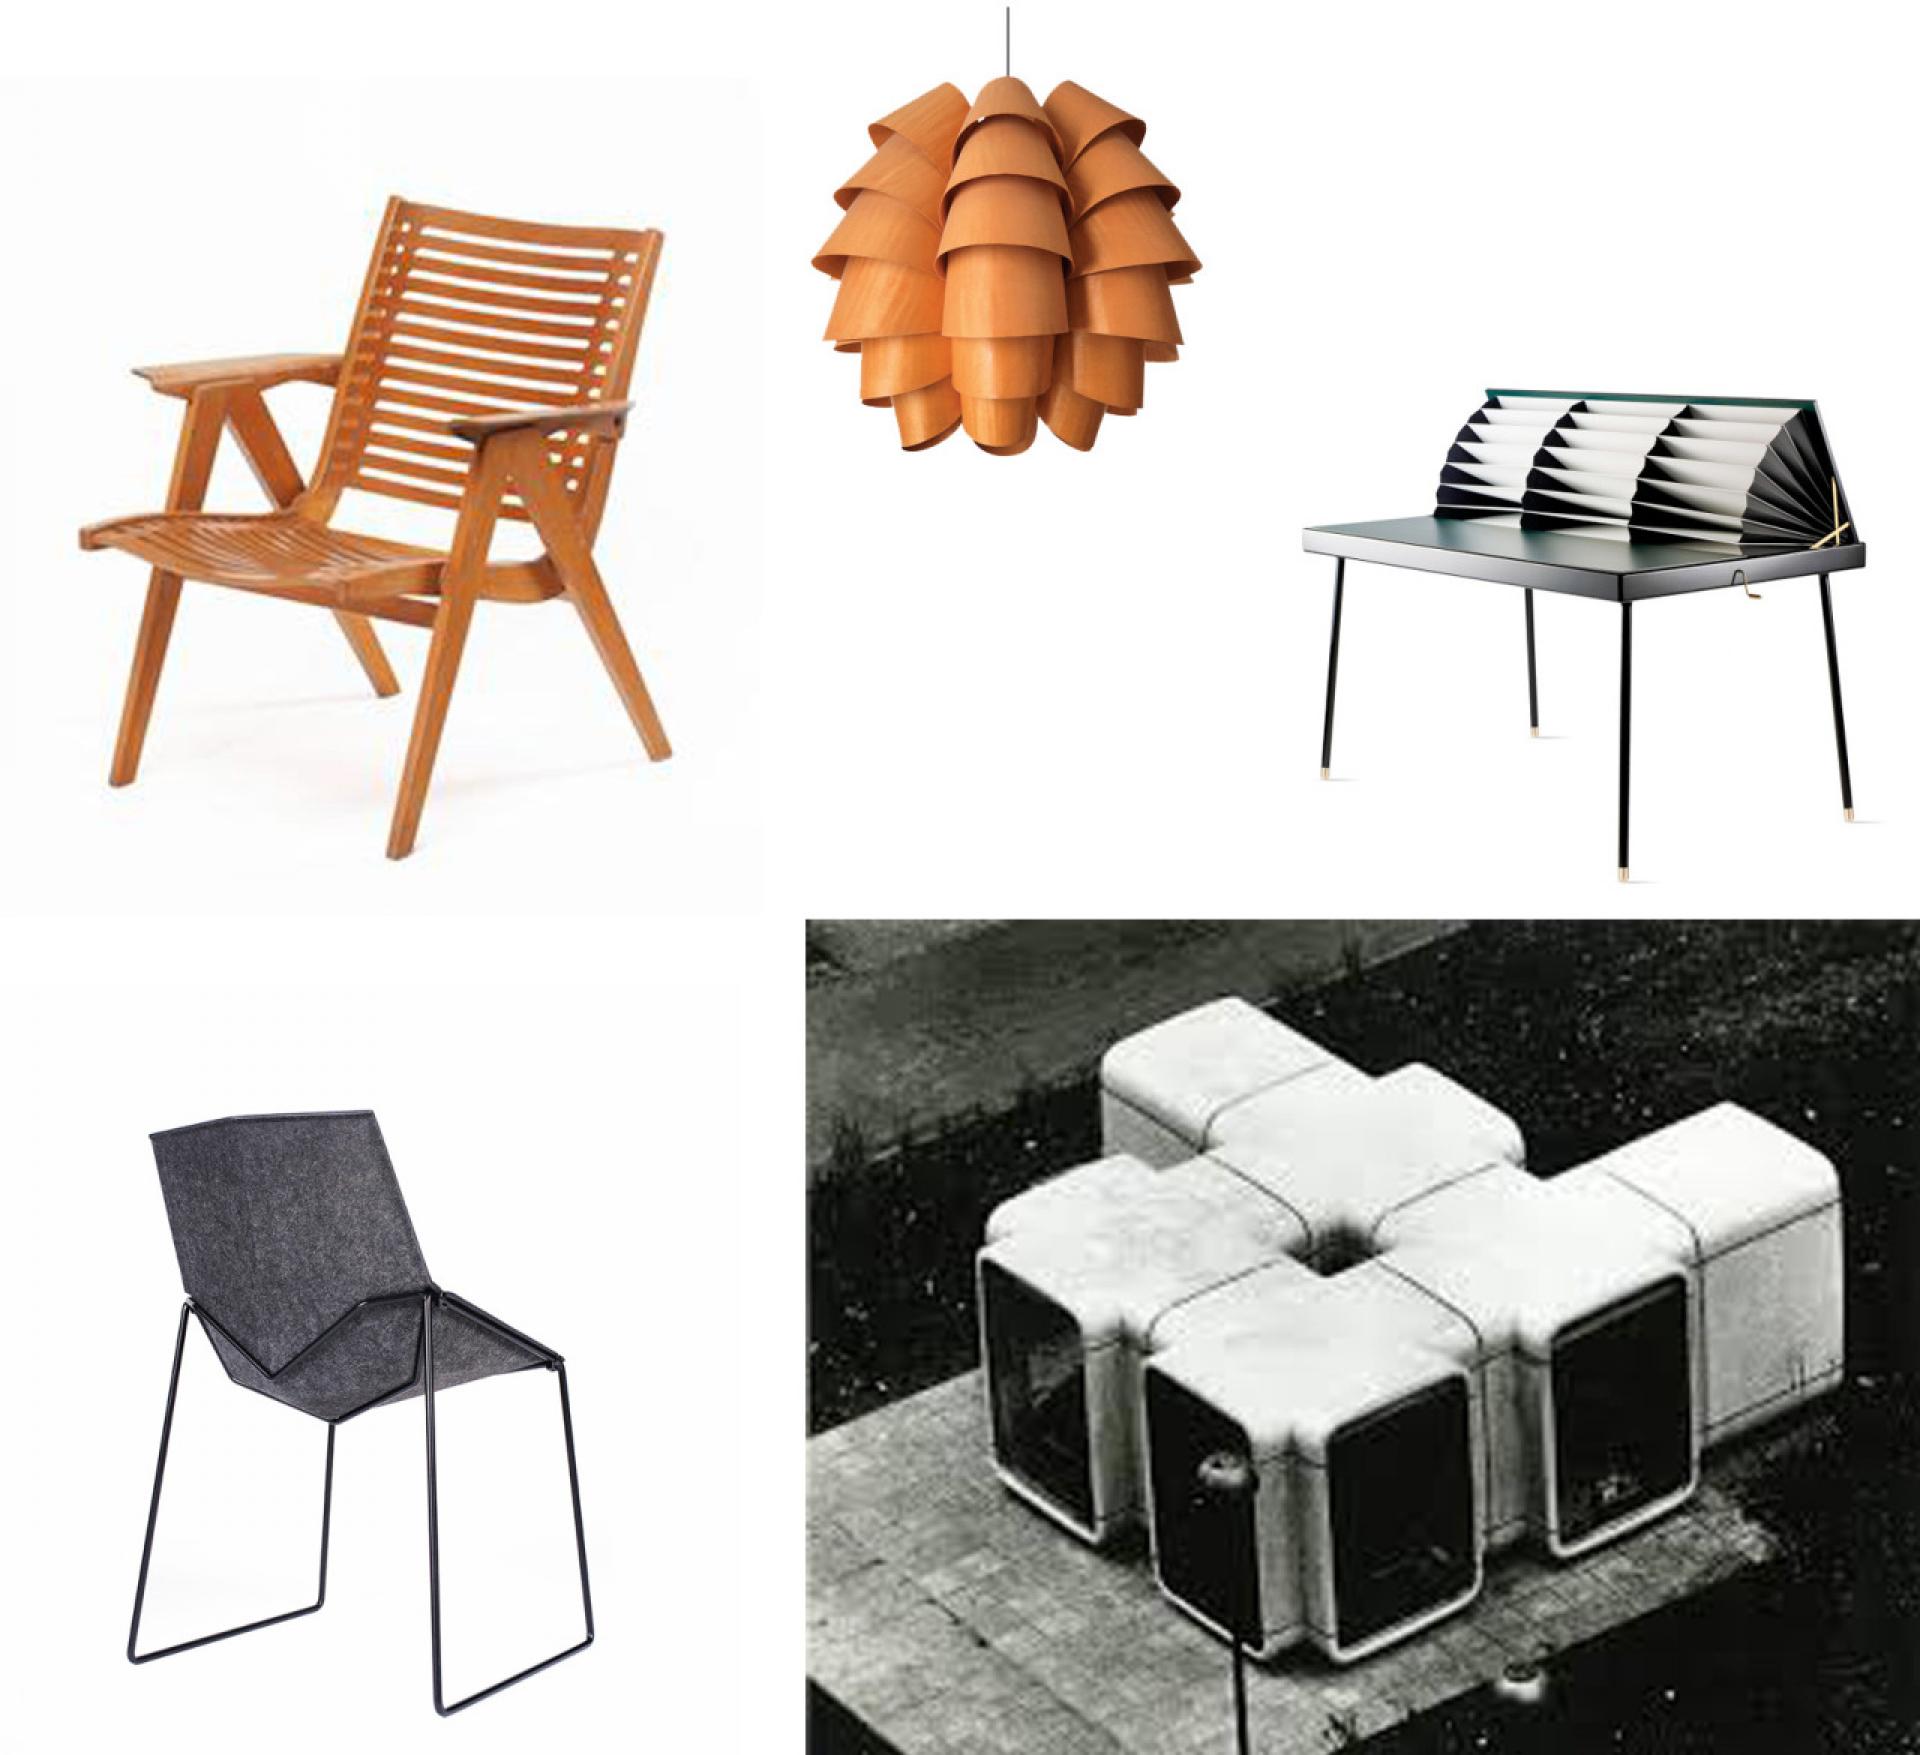 Most representative Slovenian Design from different times: Niko Kralj’s Rex Chair (1952), Nives Kalin Vehovar’s PineCone 6 Light (1962), Nika Zupanc’s Homework Table (2010), Primož Jeza’s Nico Less Chair (2016) and Saša Maechtig’s The K-67 Kiosk (1966).